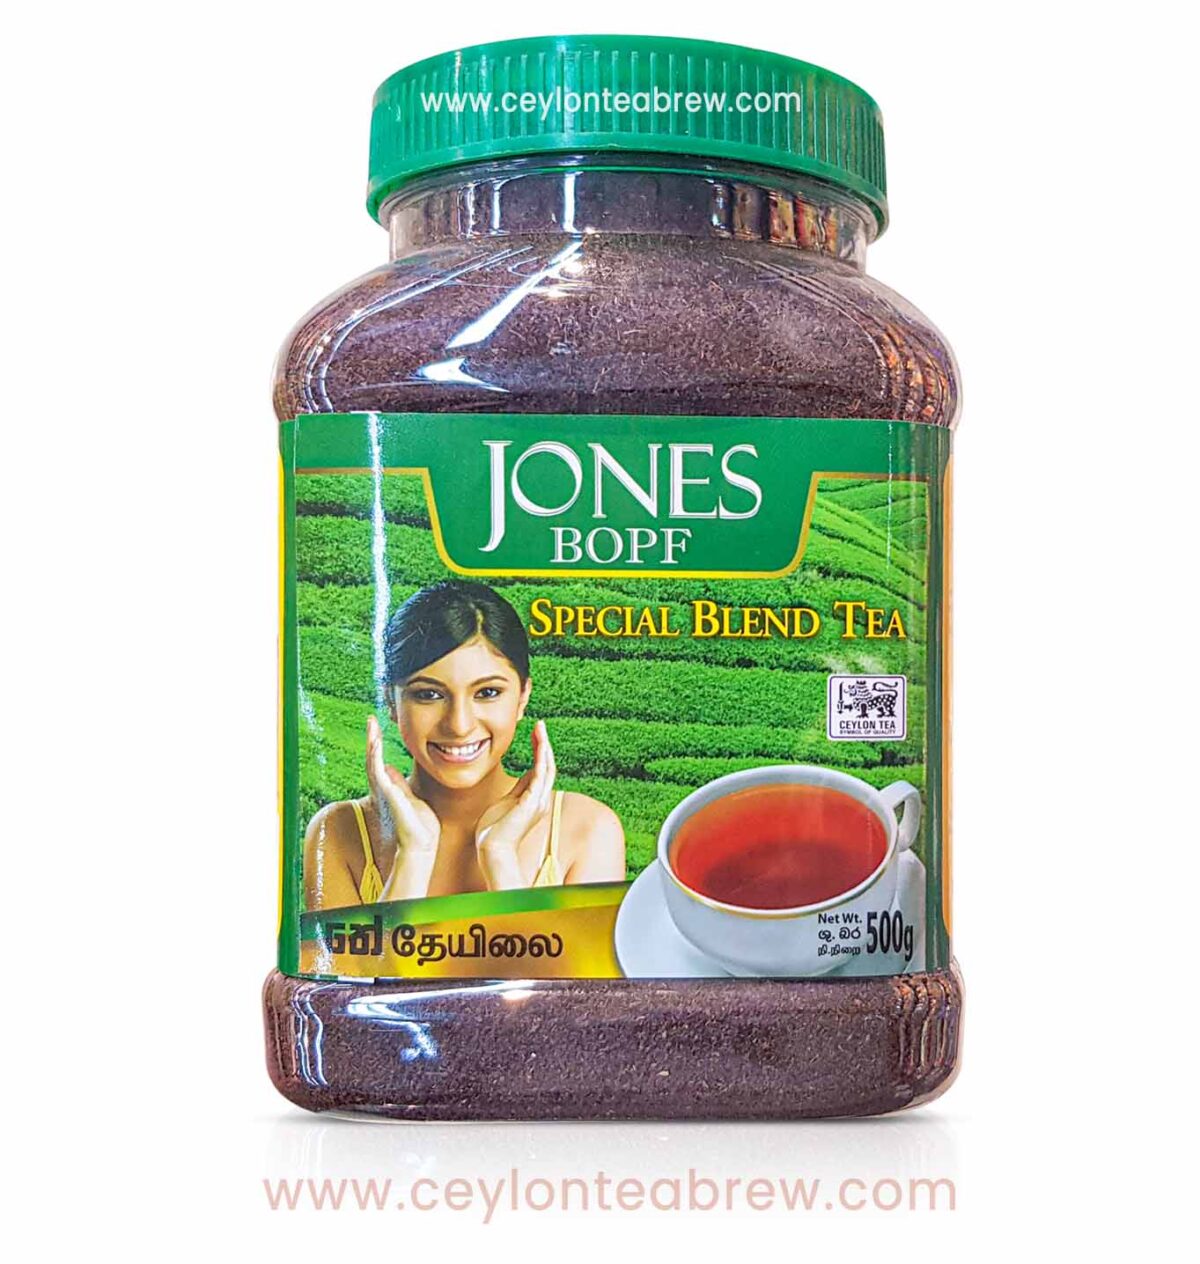 Jones Ceylon BOPF special blend black leaf tea in jar